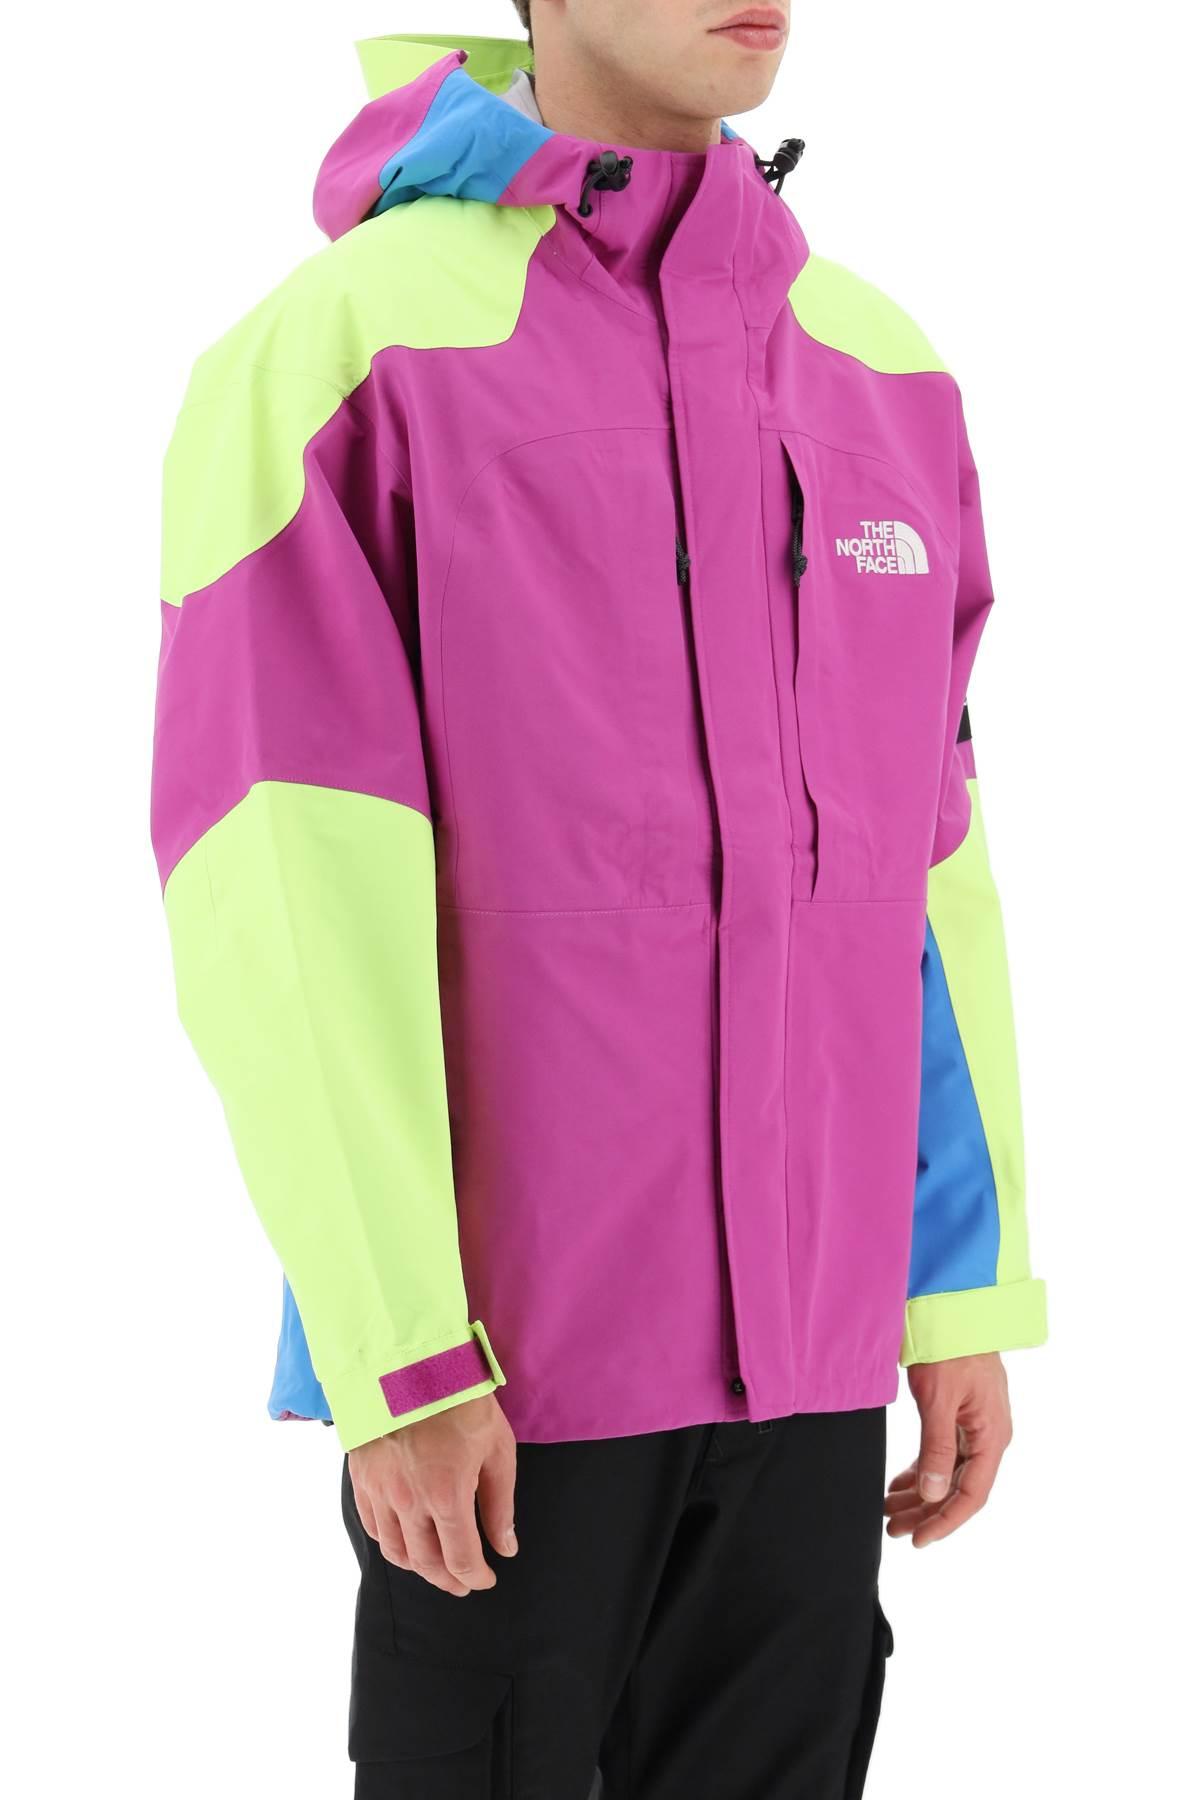 Omgeving Ontwaken Verward The North Face 'carduelis' 3 L Dryvent Jacket in Pink for Men | Lyst